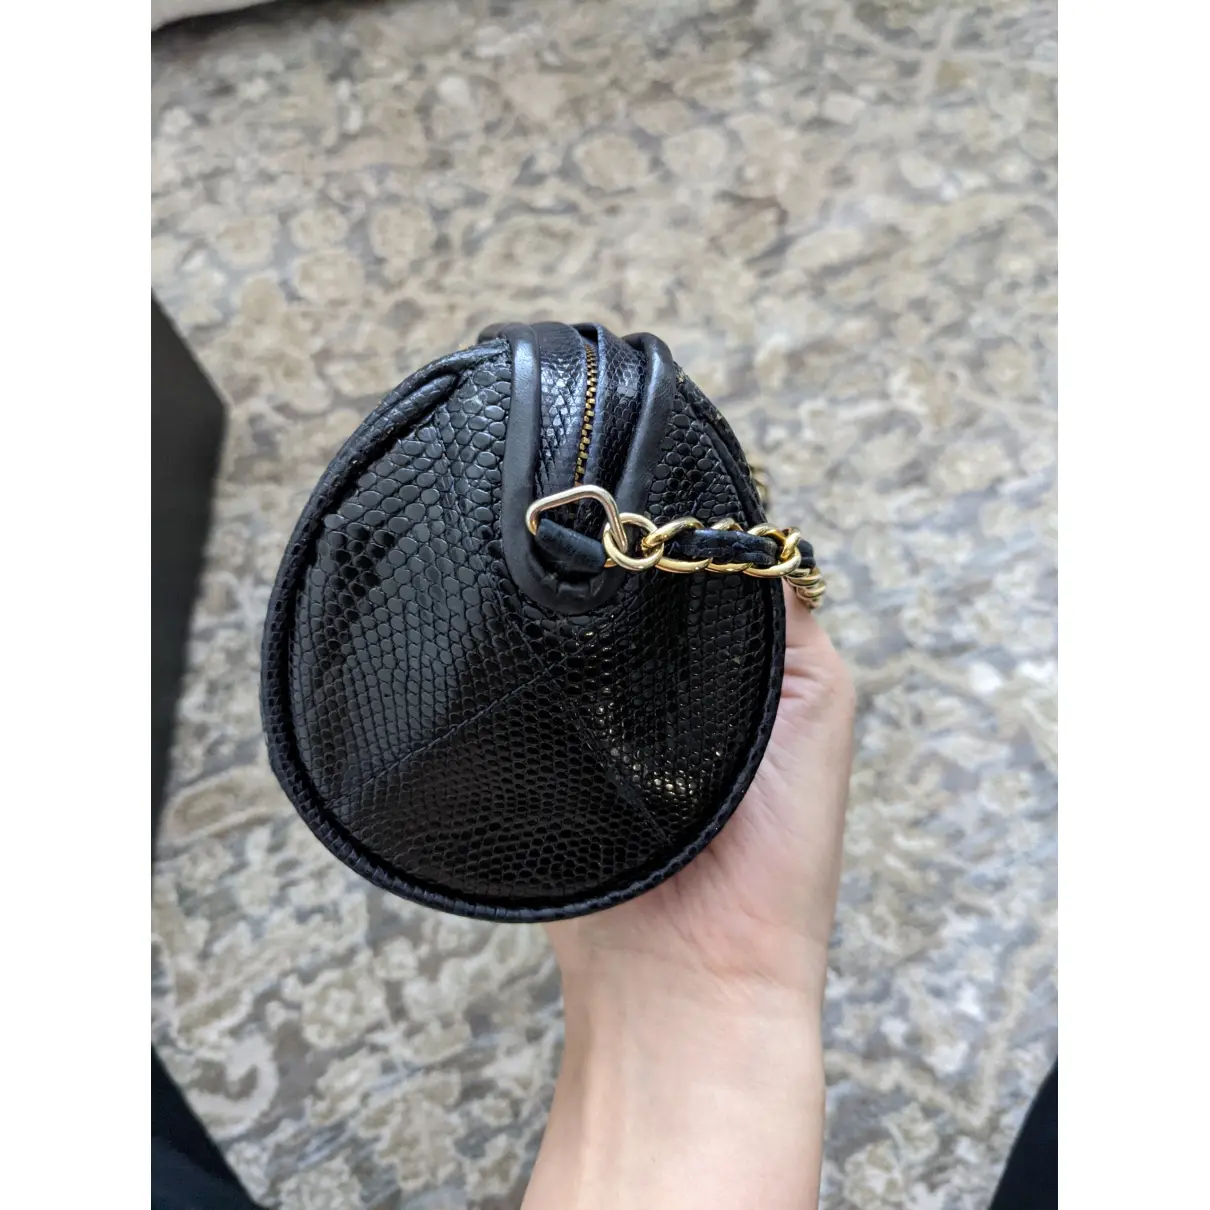 Lizard handbag Chanel